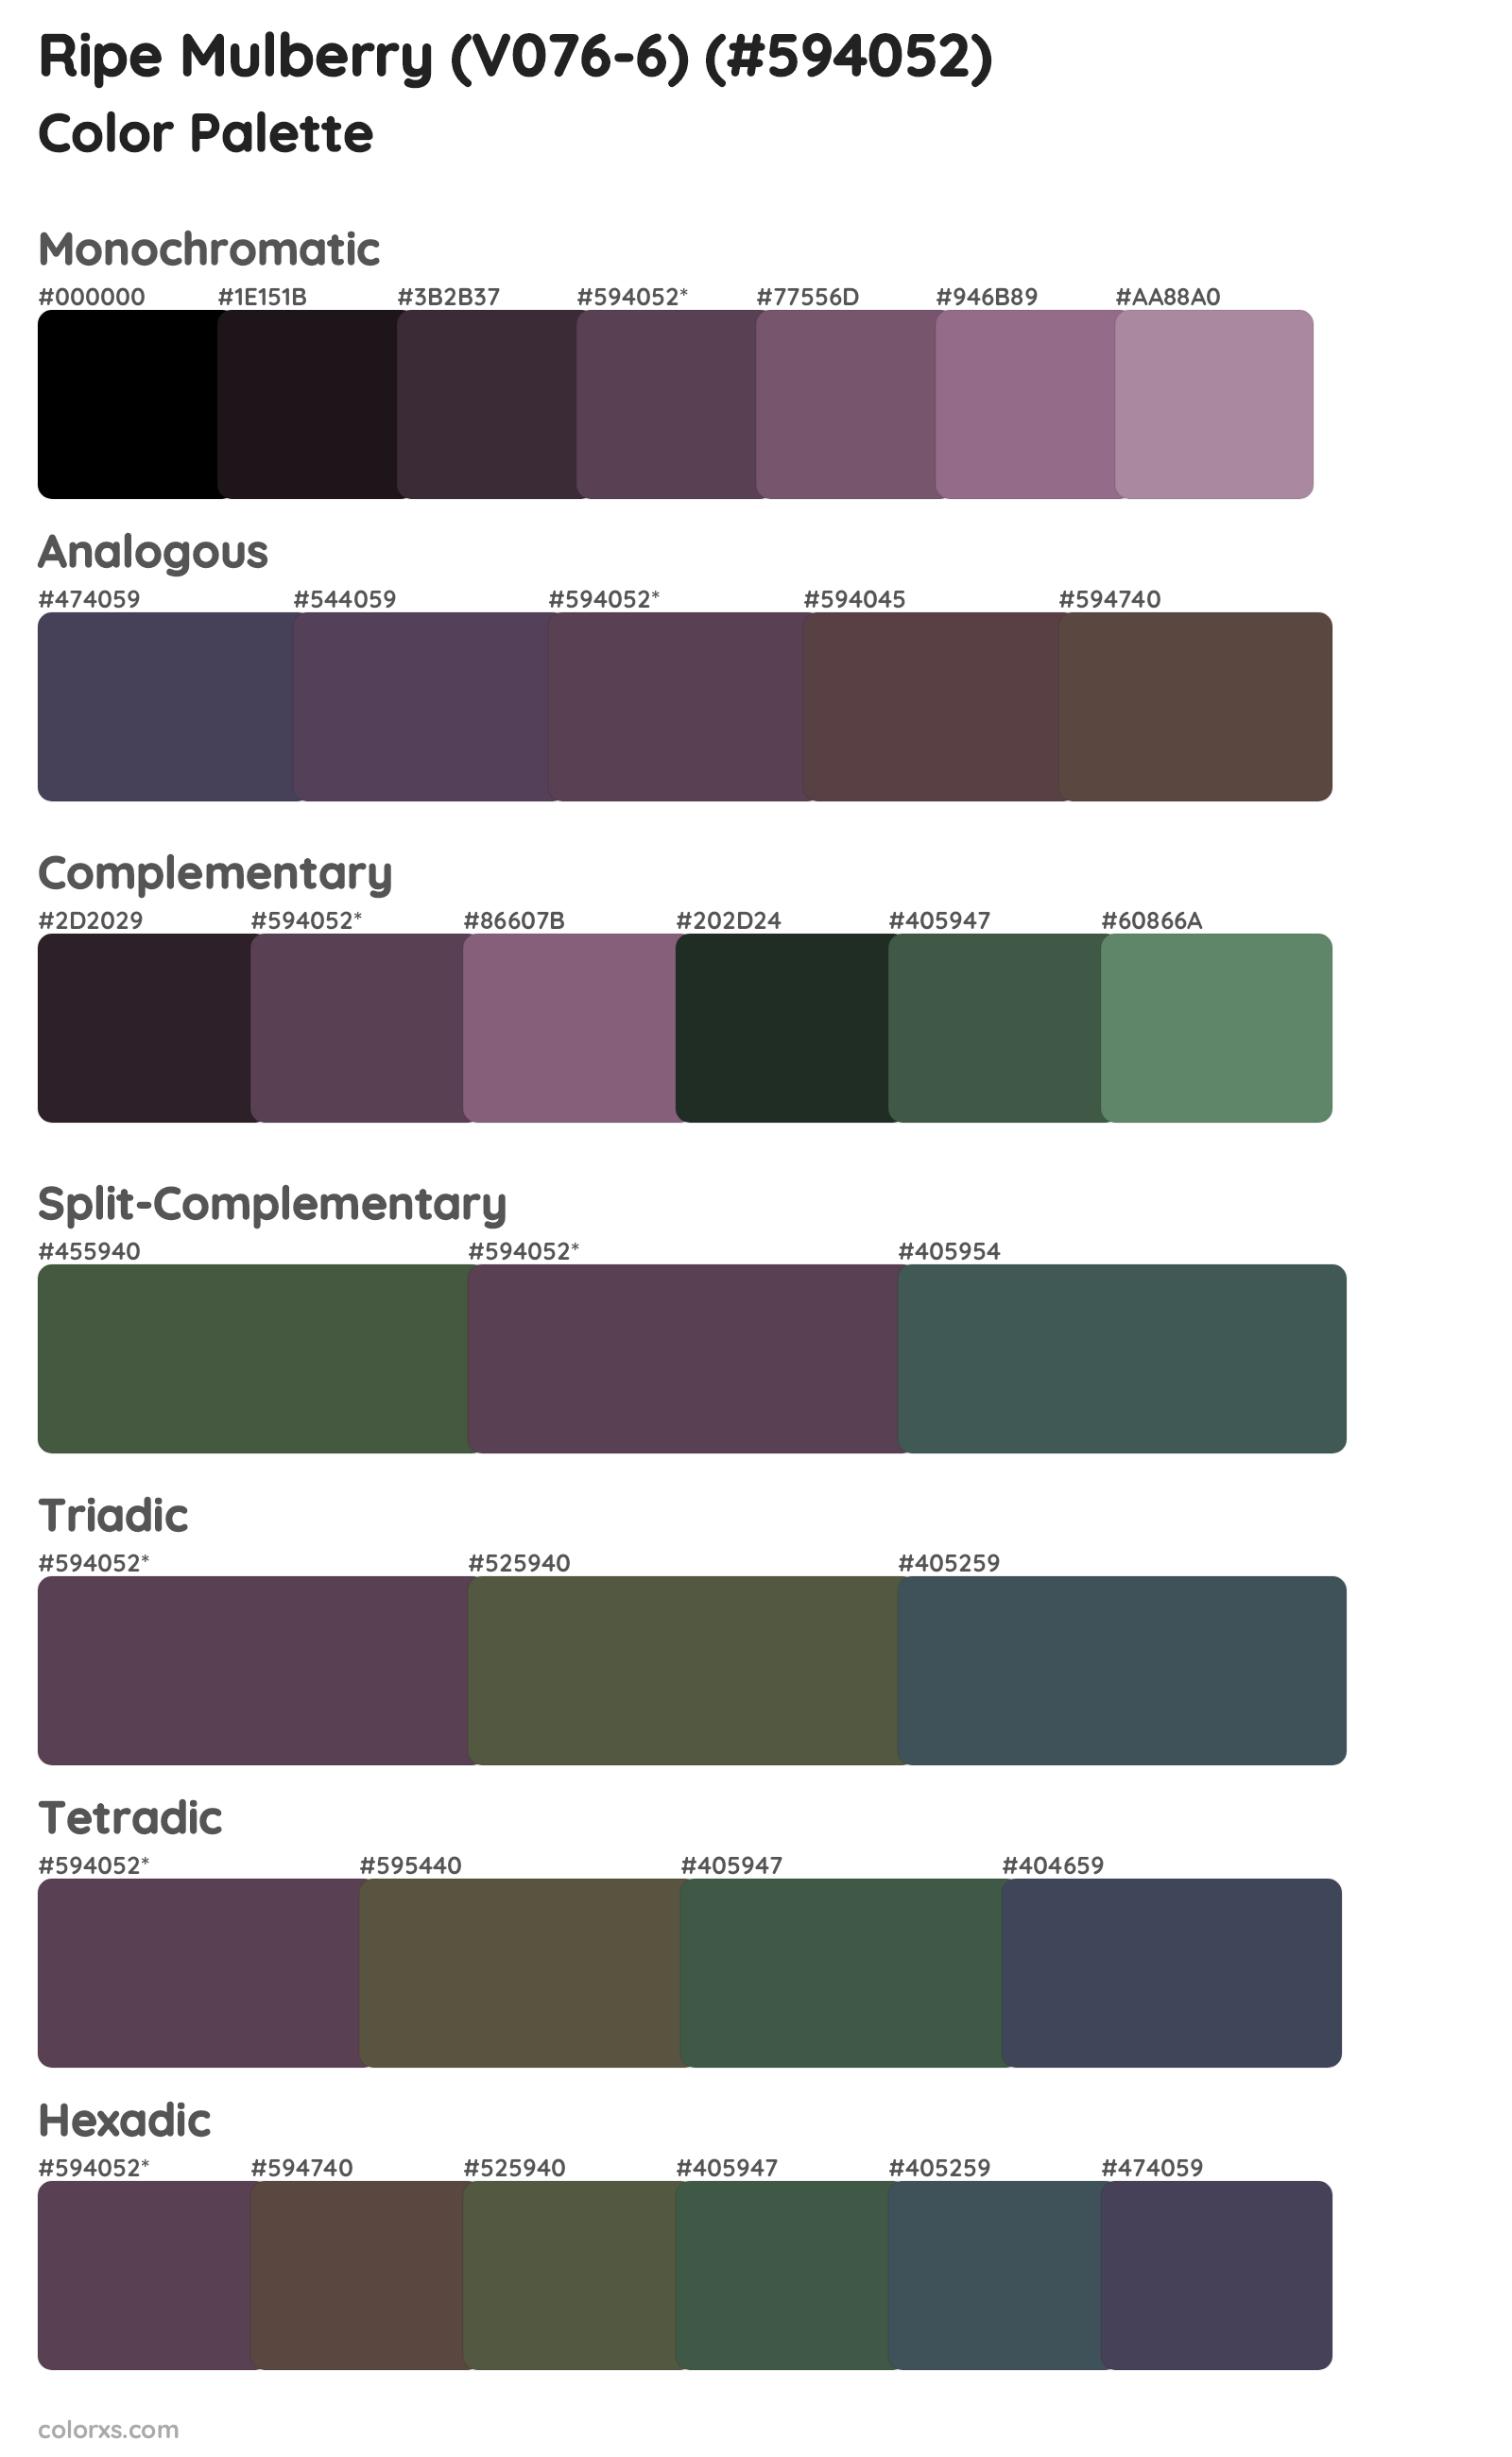 Ripe Mulberry (V076-6) Color Scheme Palettes